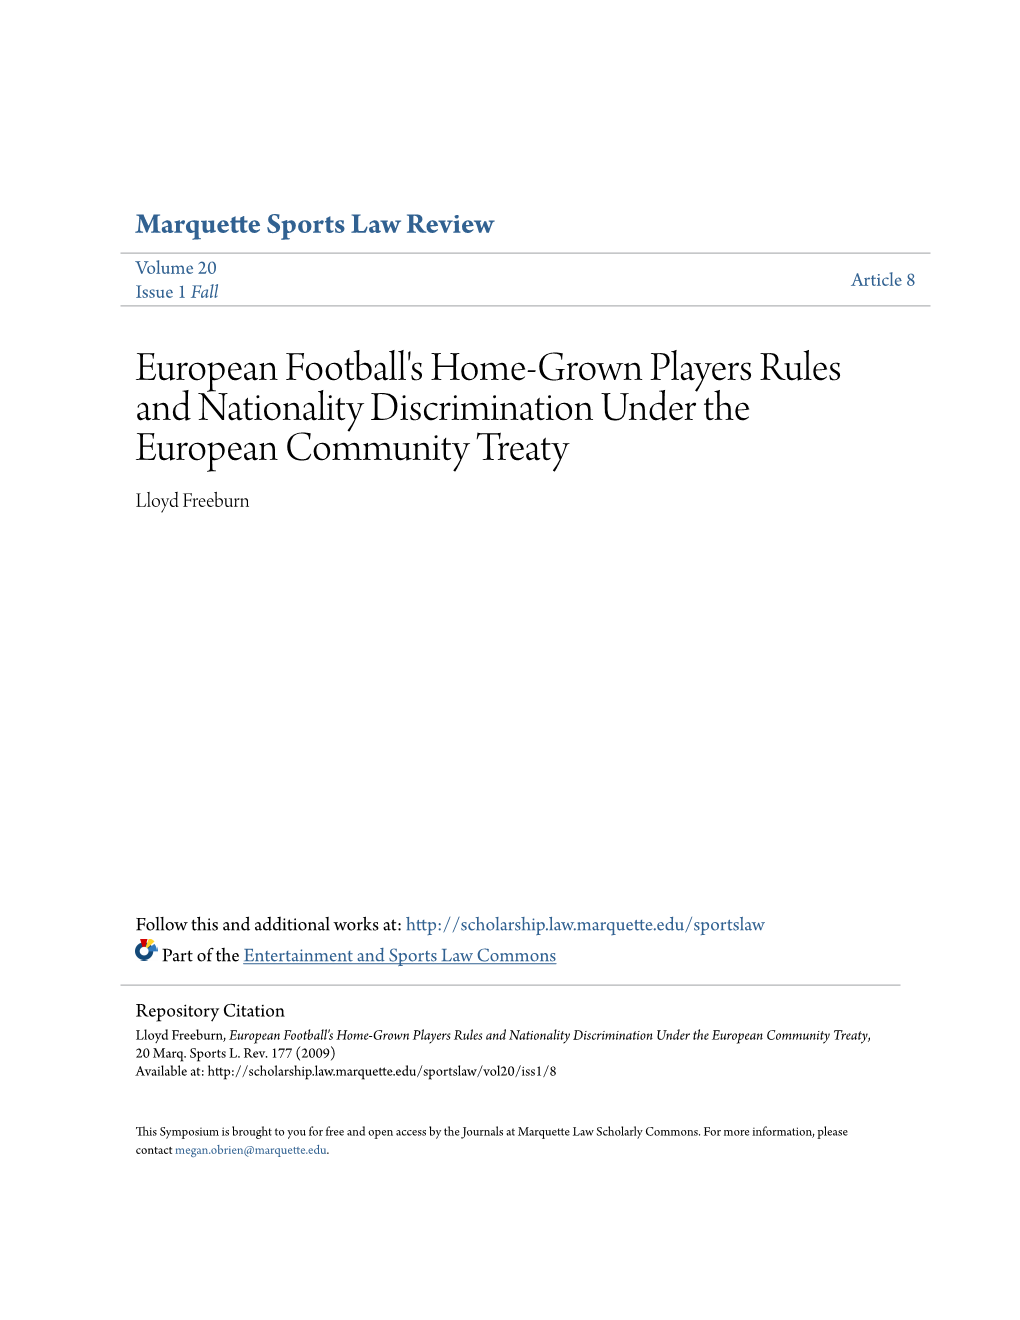 European Football's Home-Grown Players Rules and Nationality Discrimination Under the European Community Treaty Lloyd Freeburn